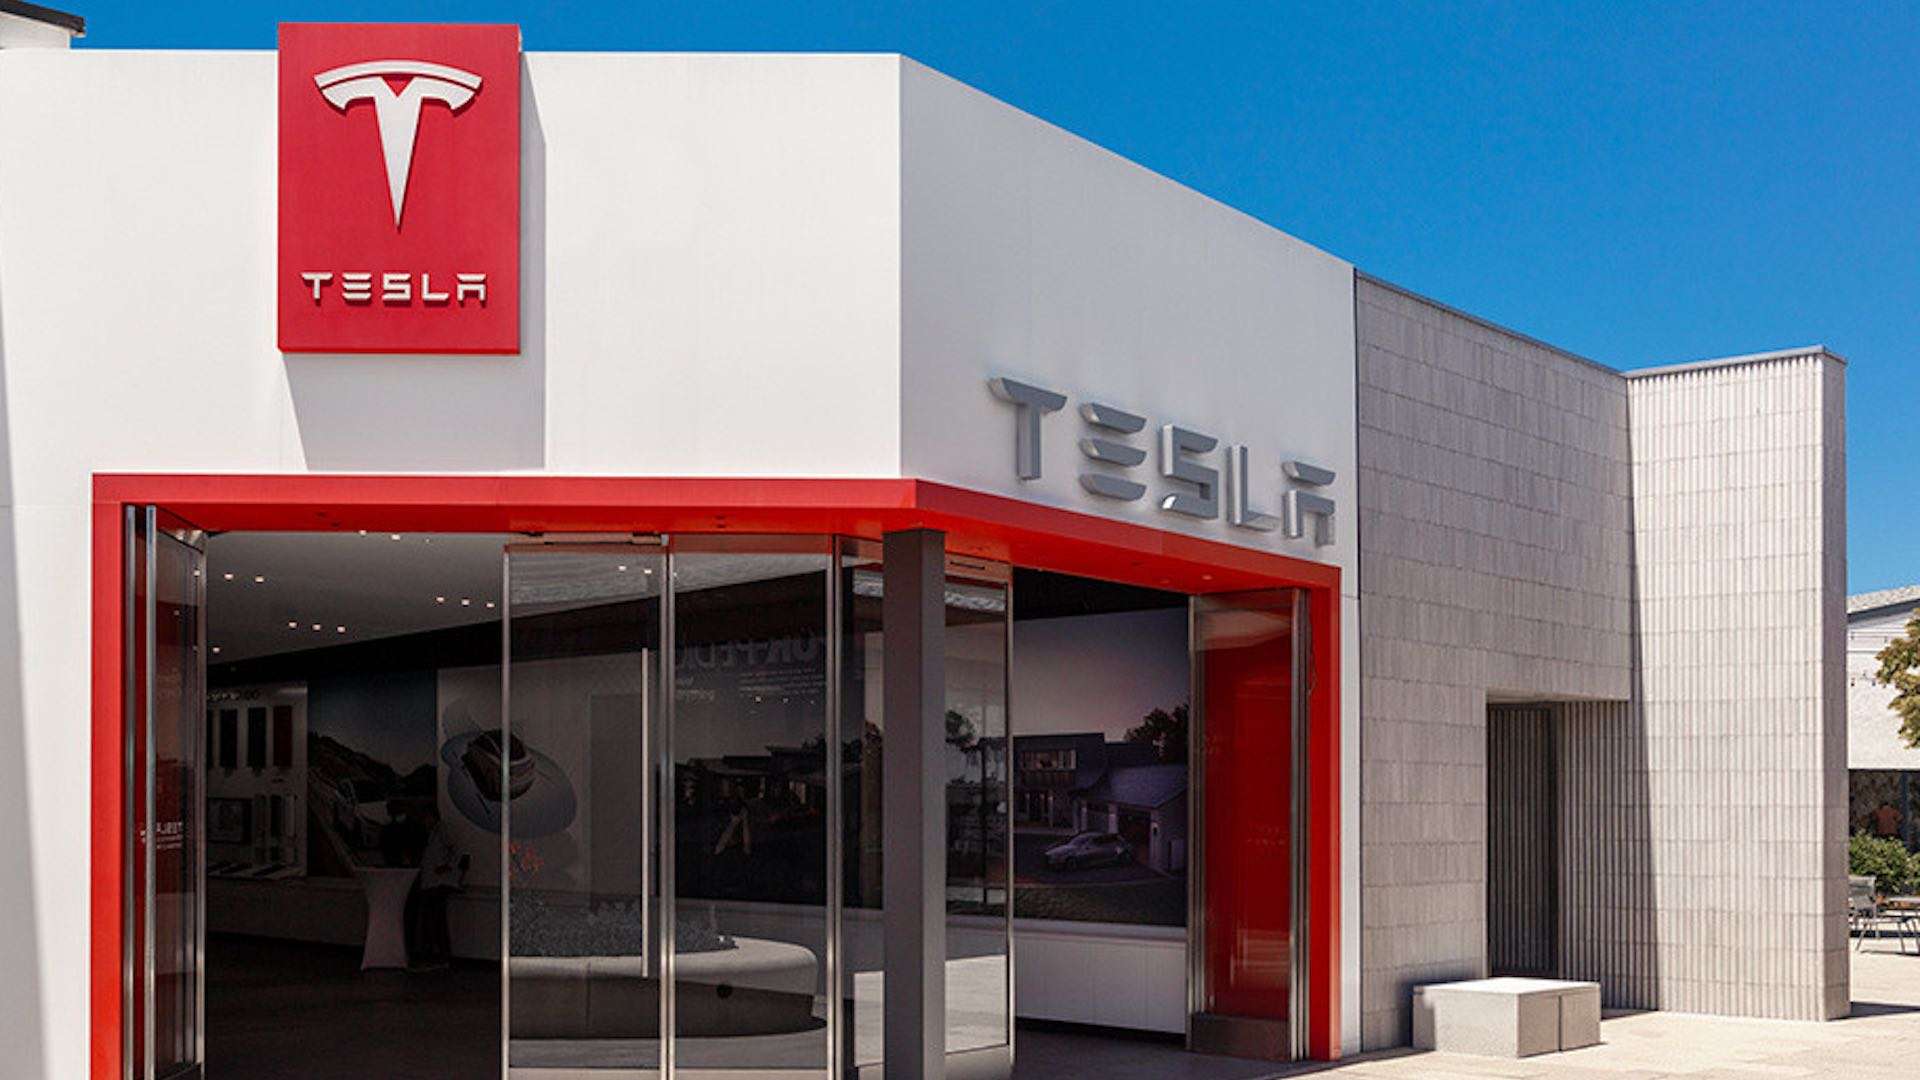 Short sellers made $15 billion in profits betting against Tesla